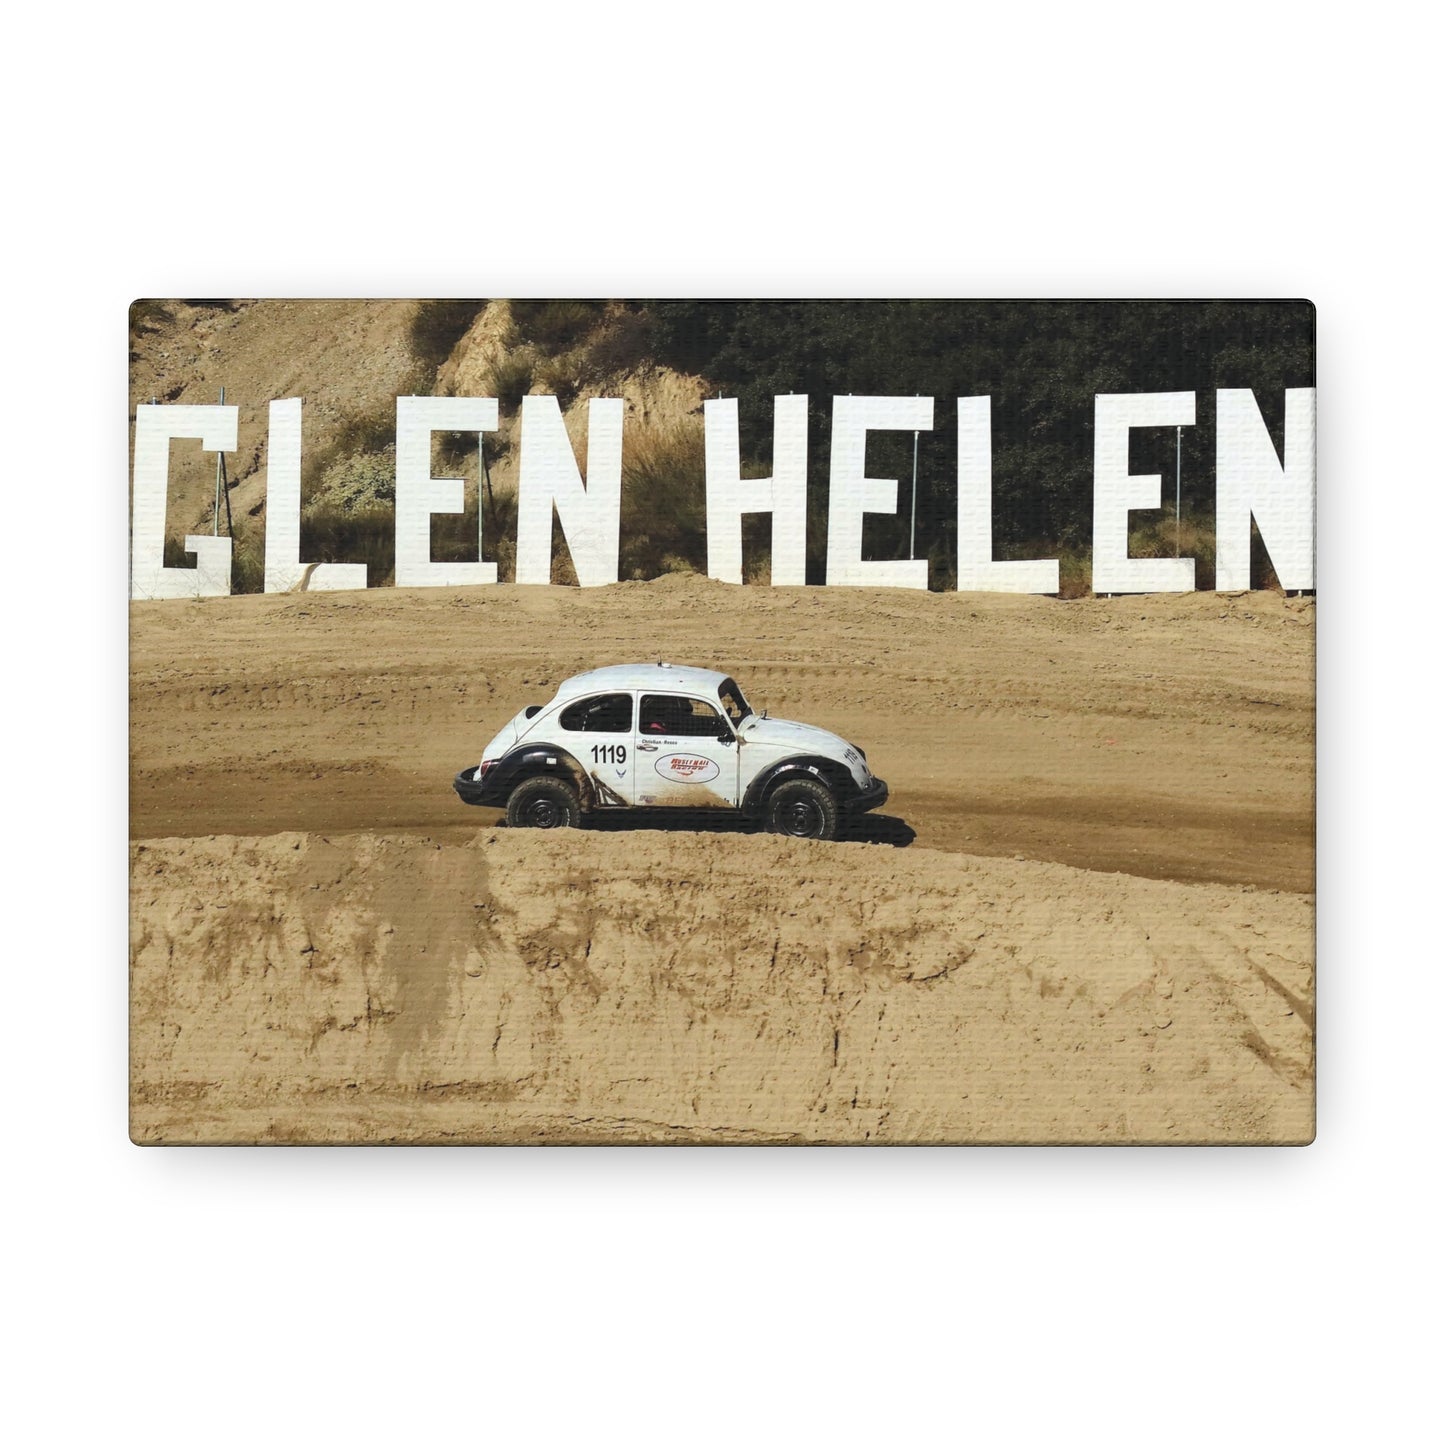 1119 Glen Helen canvas print